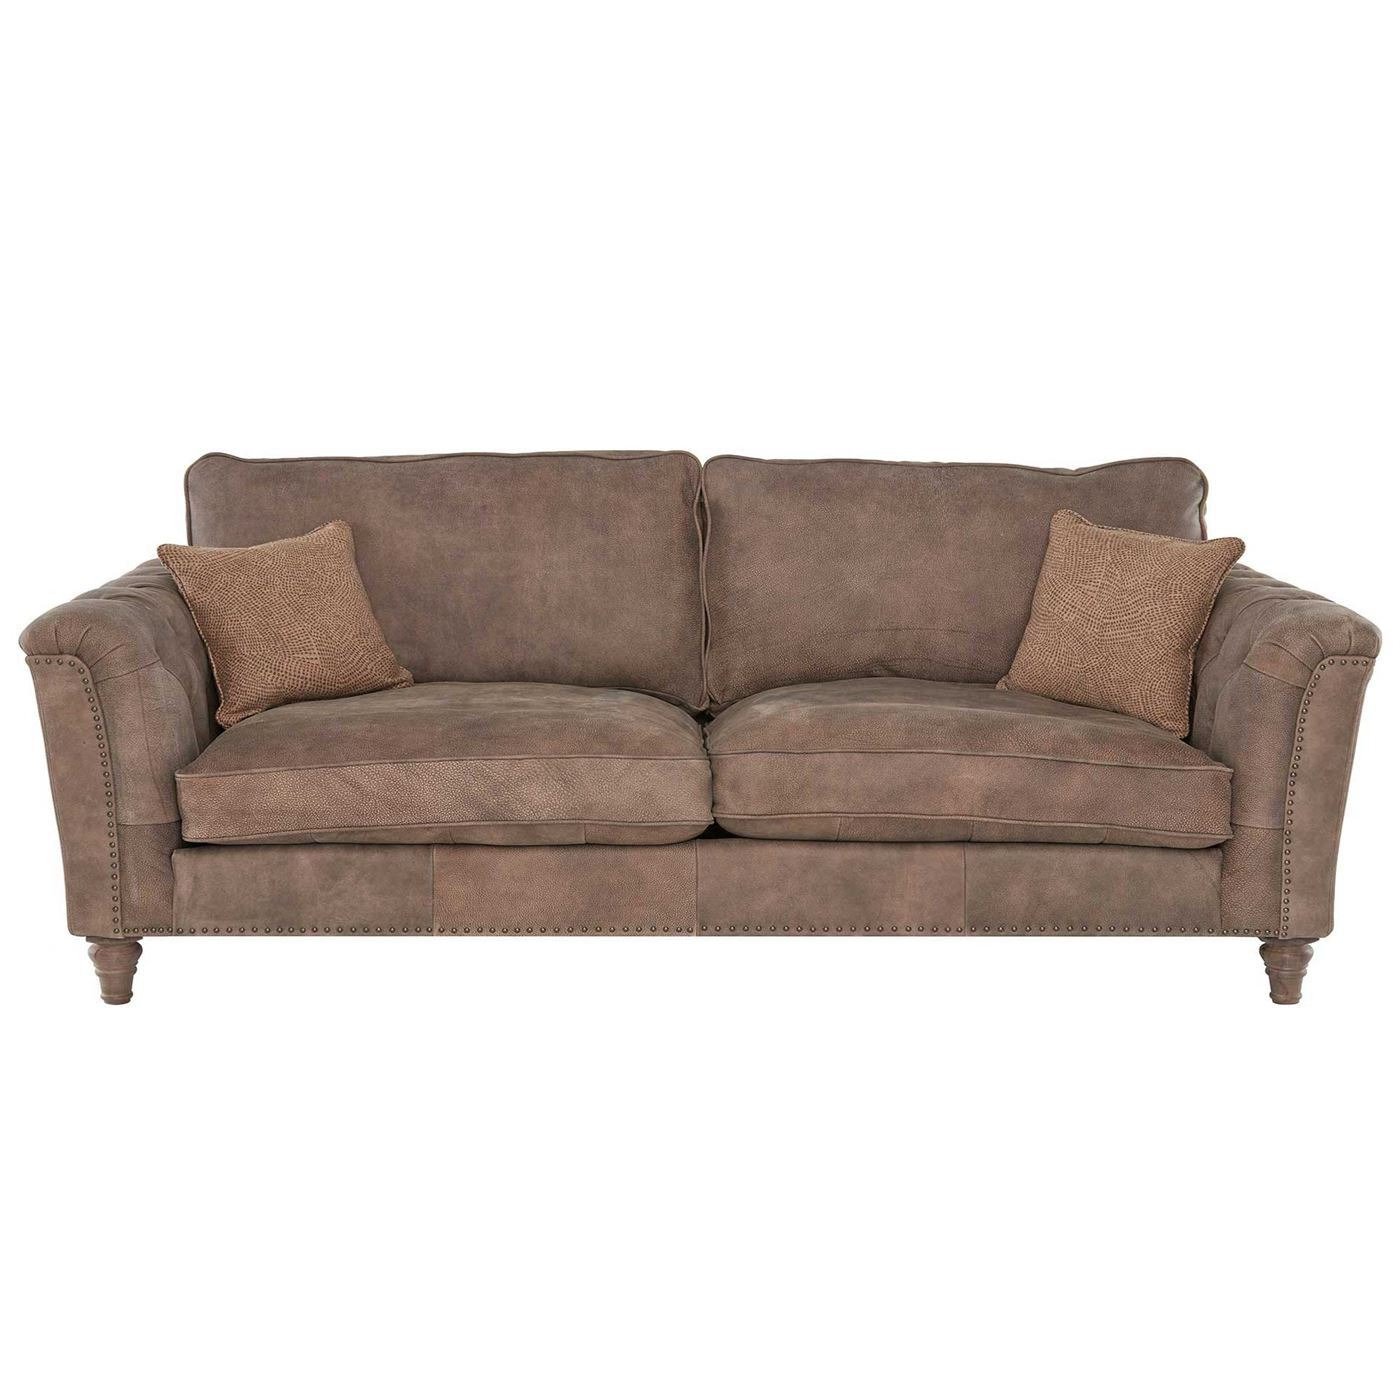 Darwin Extra Large Sofa Standard Back, Brown - Barker & Stonehouse - image 1